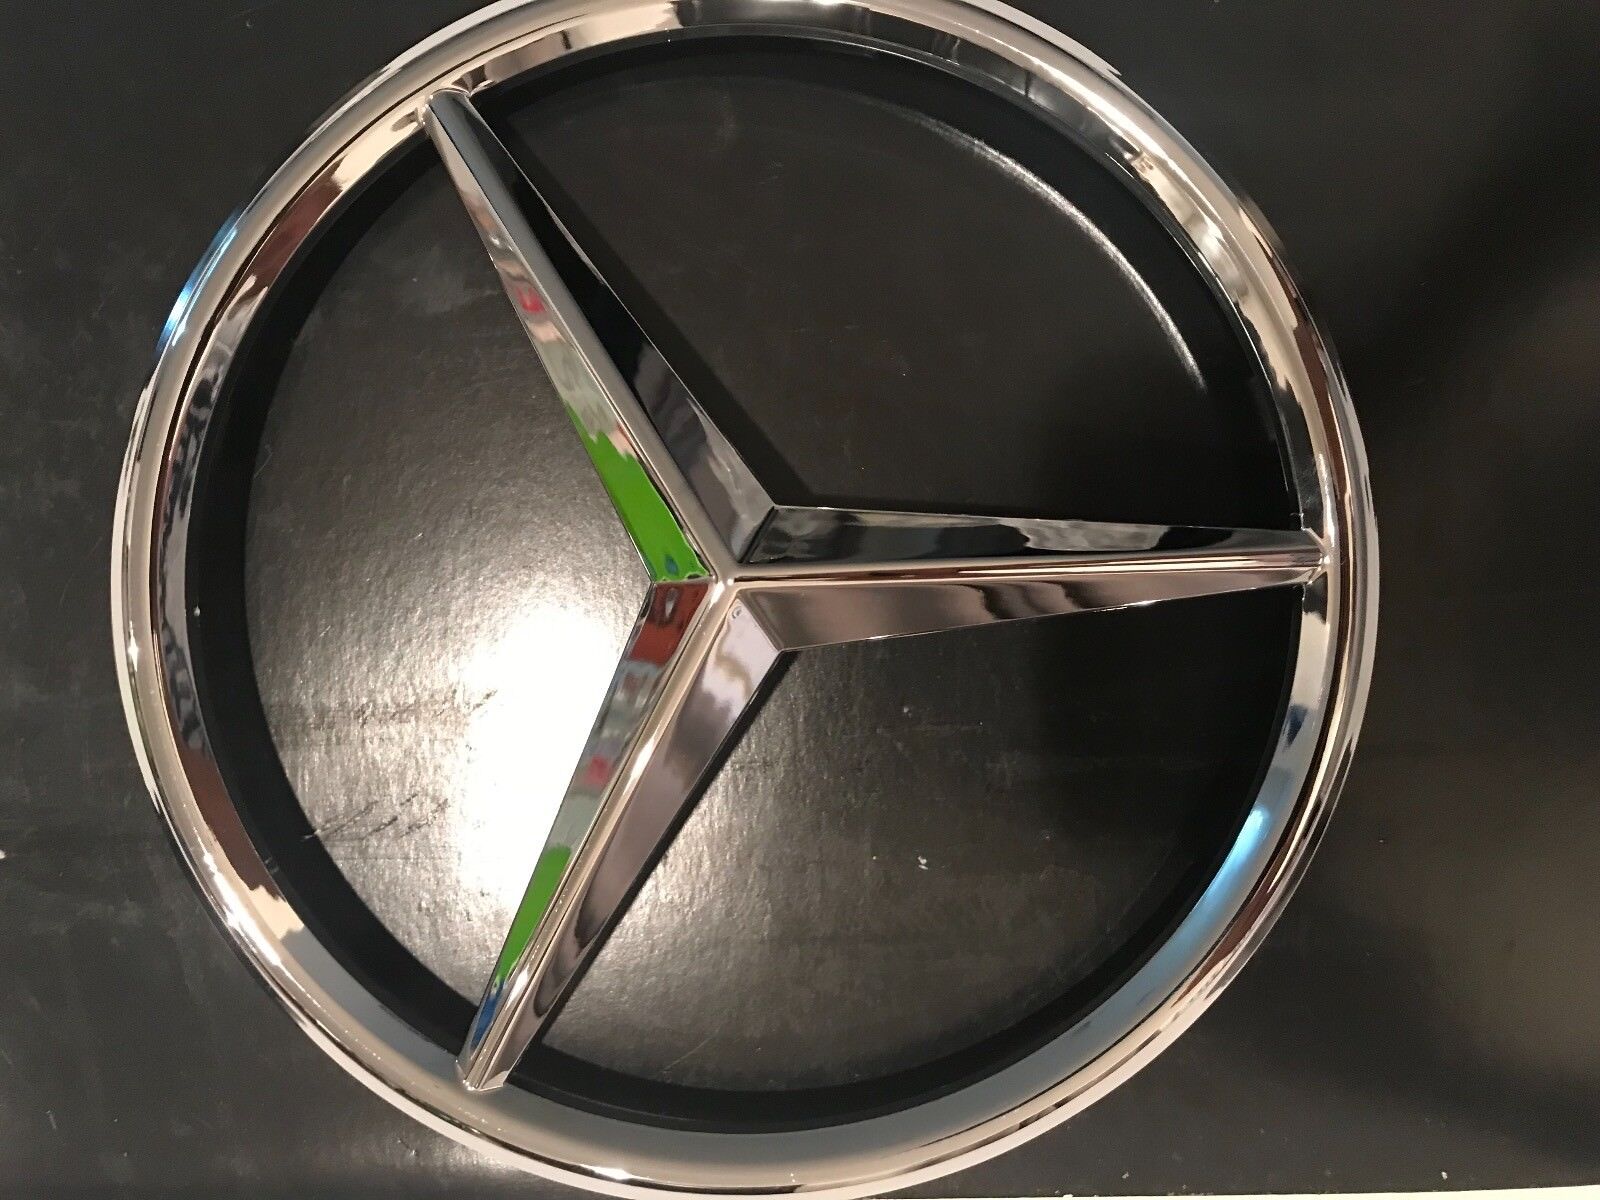 Mercedes Sprinter Front Star Emblems Chrome Grille Emblems for Van Truck OEM New